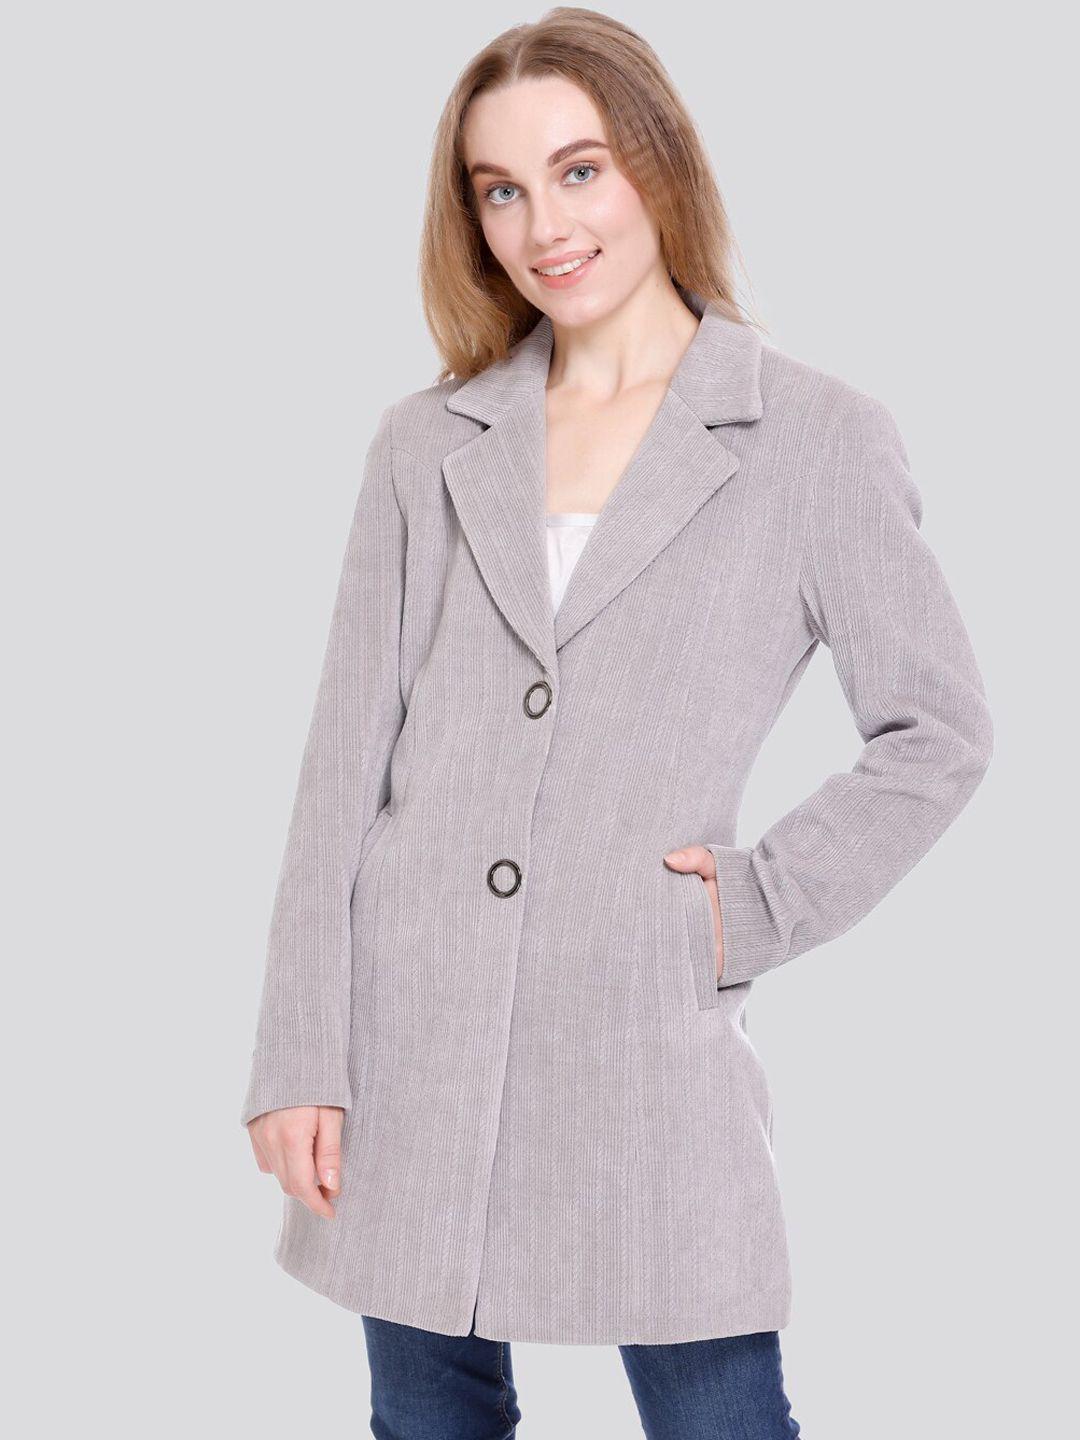 c-aerin self design single breasted winter wear stylish overcoat